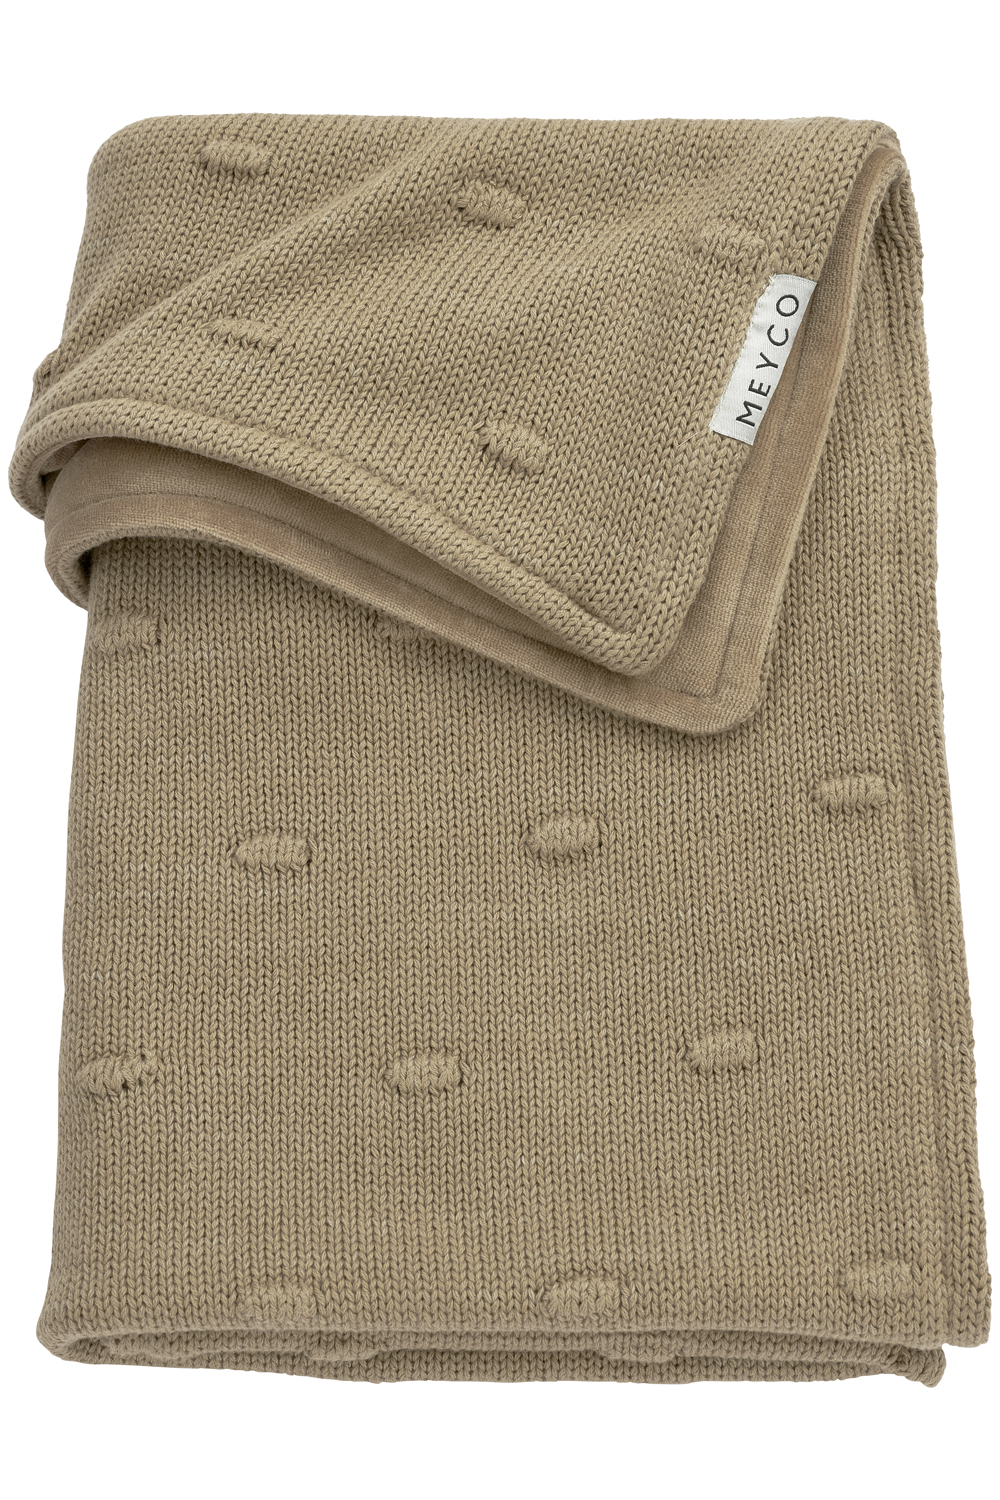 Cot Bed Blanket Velvet Knots - Taupe - 100X150cm